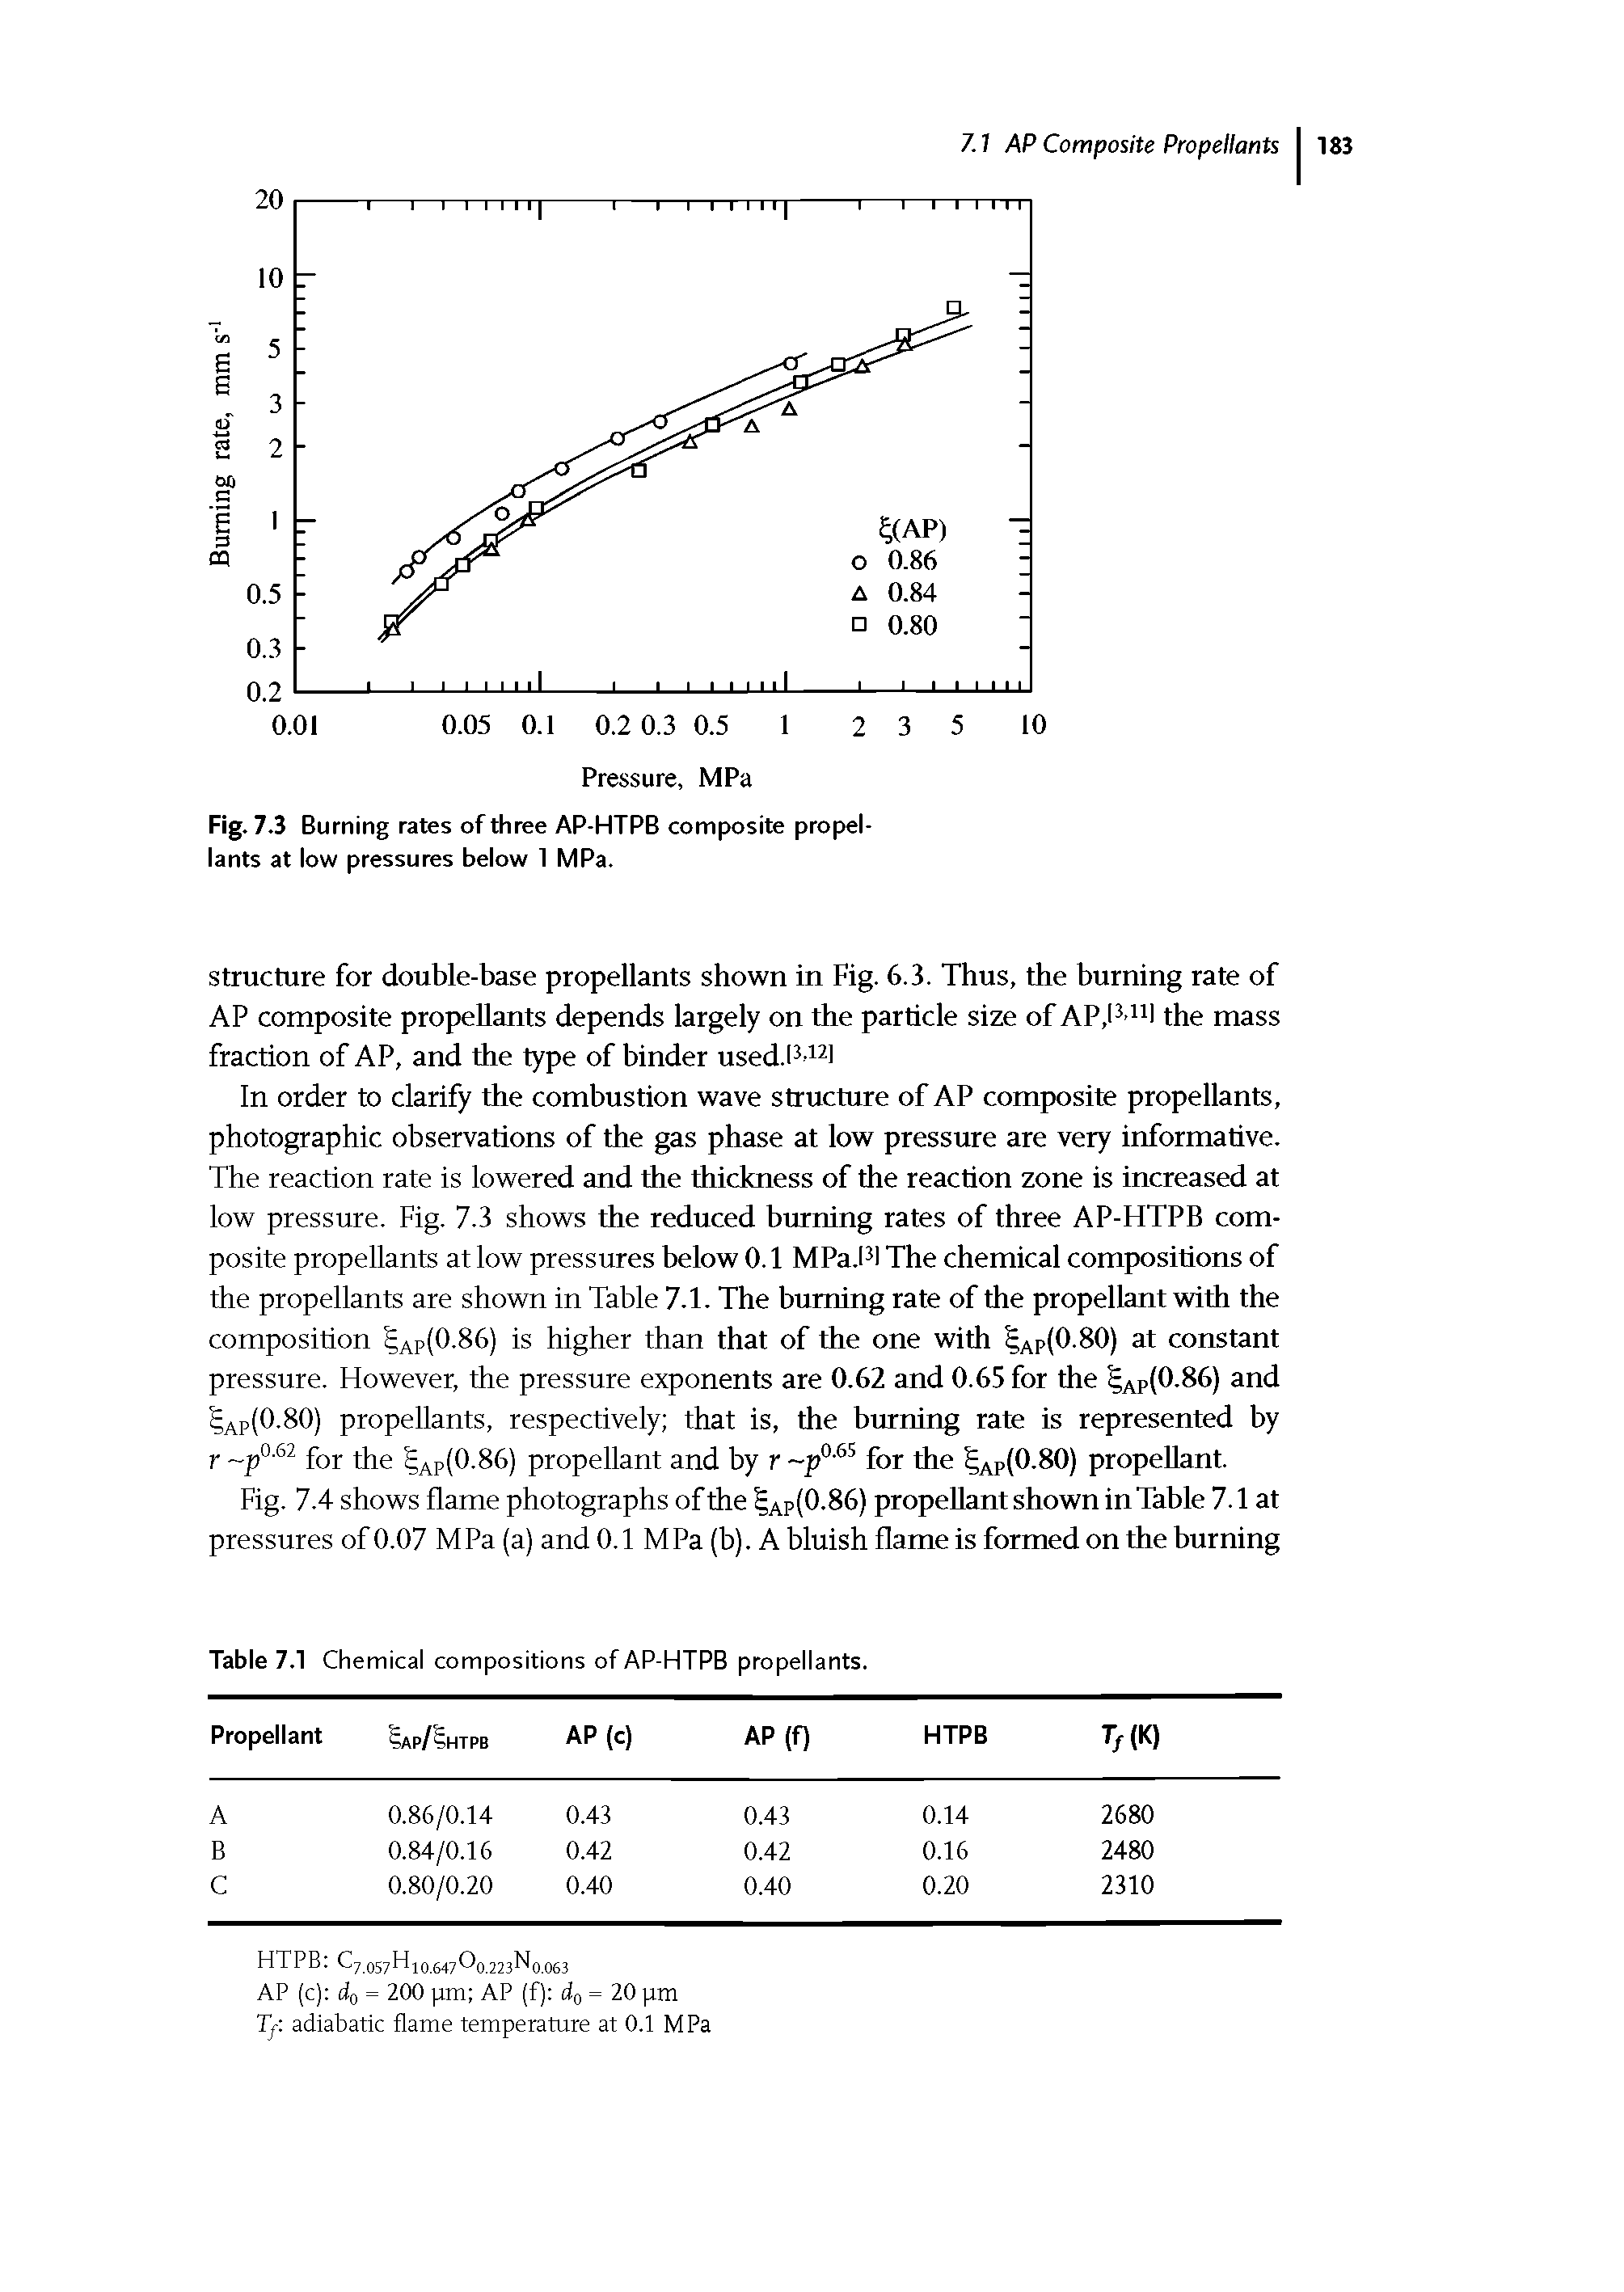 Fig. 7.3 Burning rates of three AP-HTPB composite propellants at low pressures below 1 MPa.